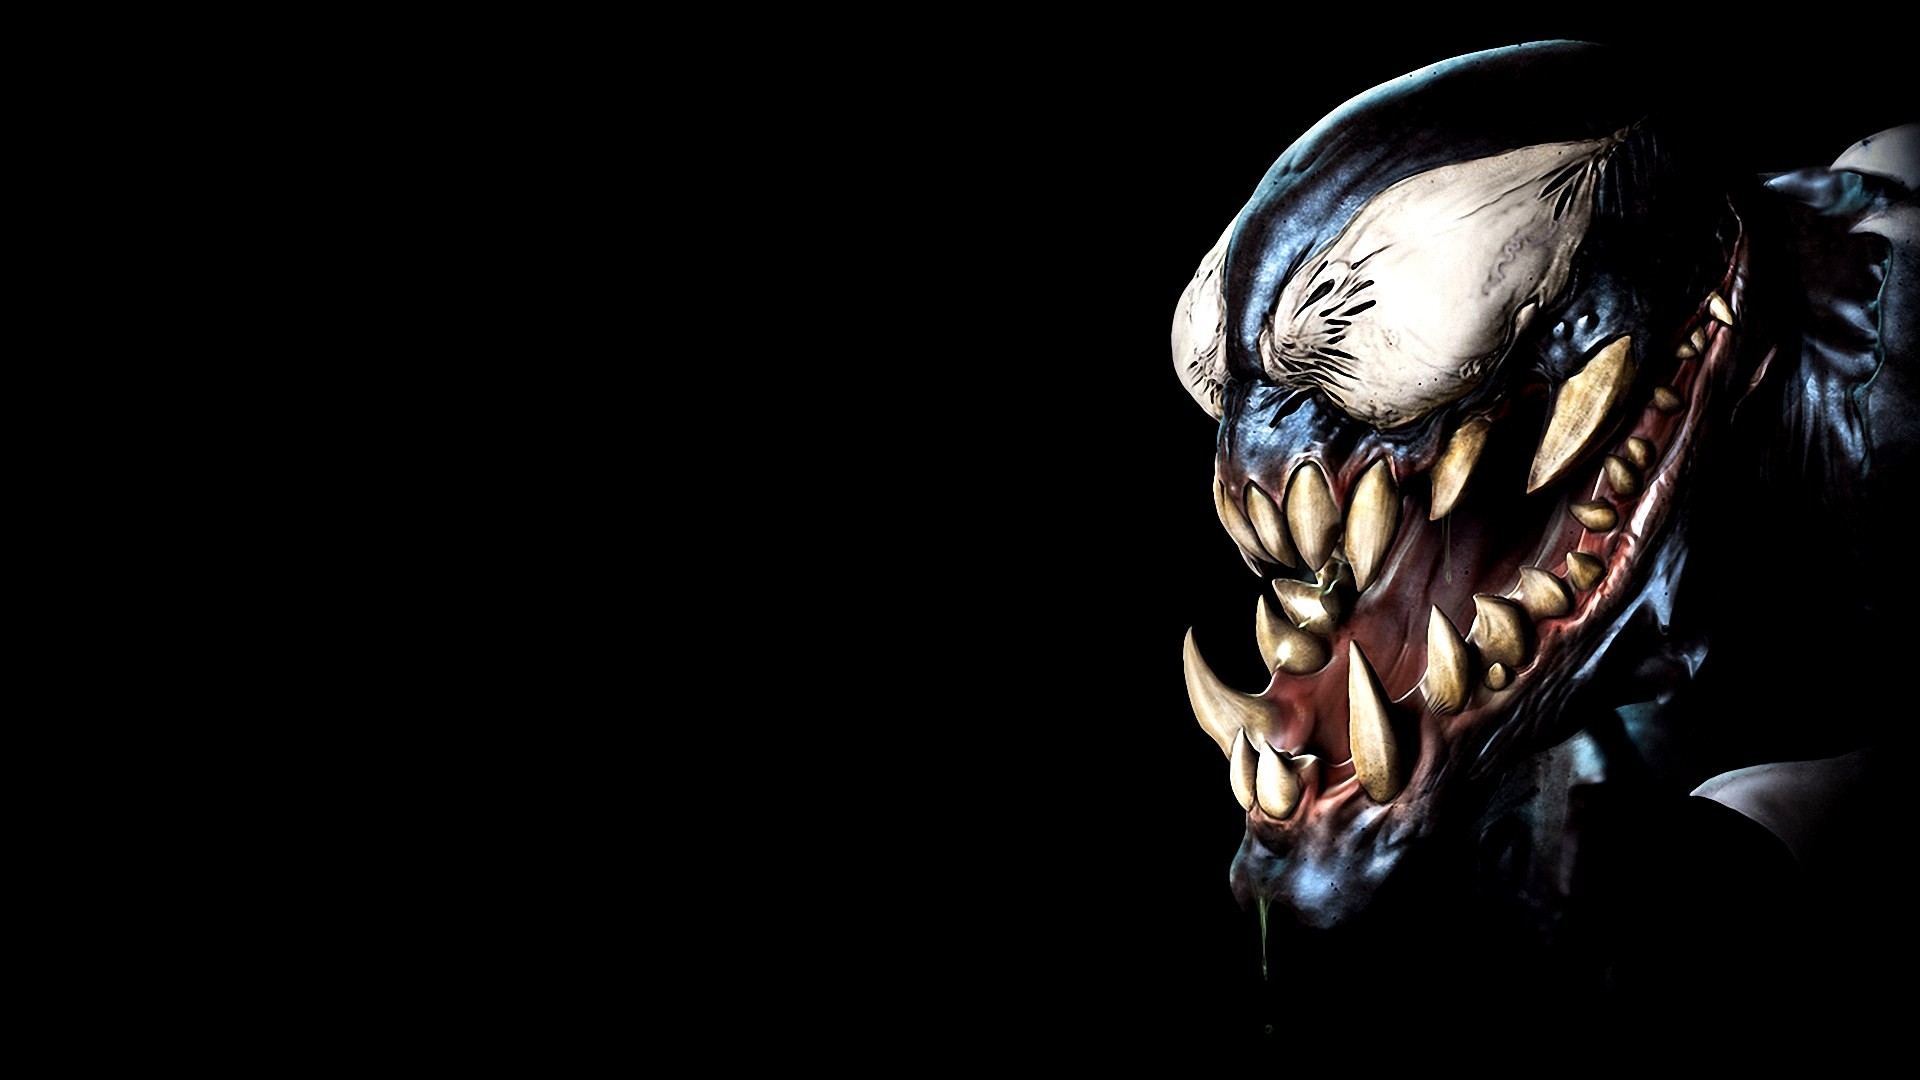 Spider Man villains images Venom wallpaper and background